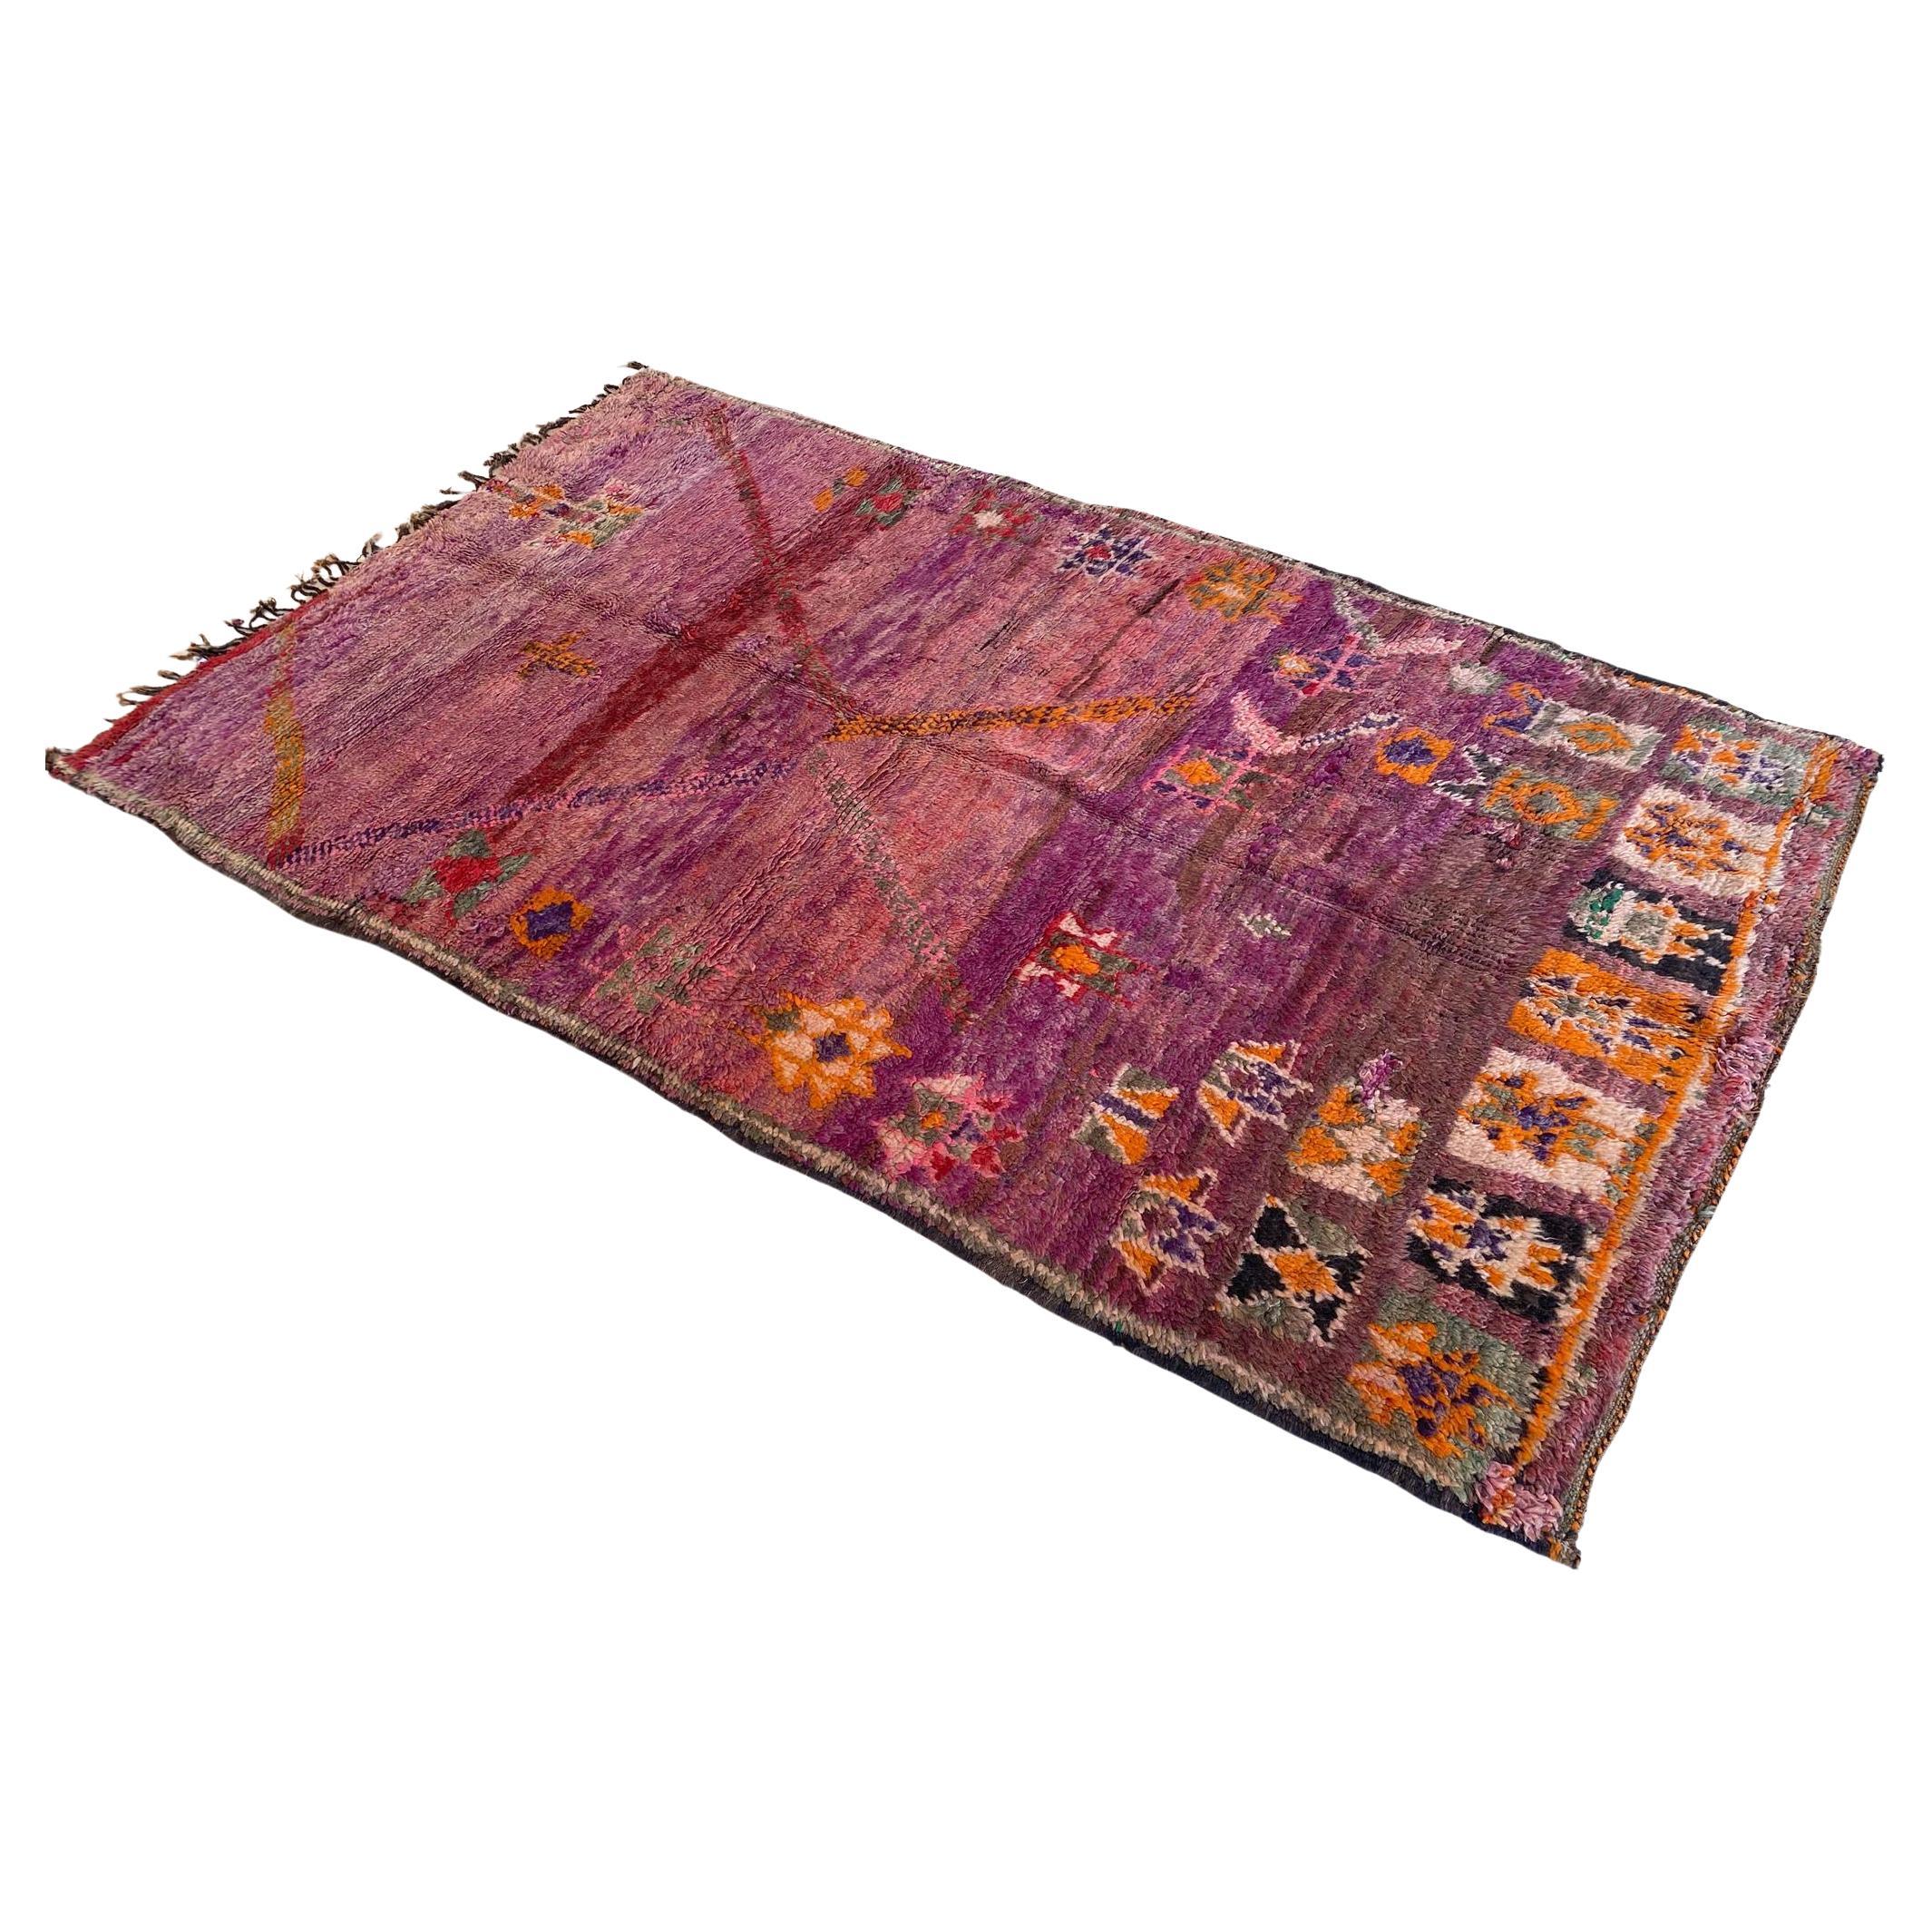 Vintage Moroccan Boujad rug - Purple/orange - 5.1x8.8feet / 157x268cm